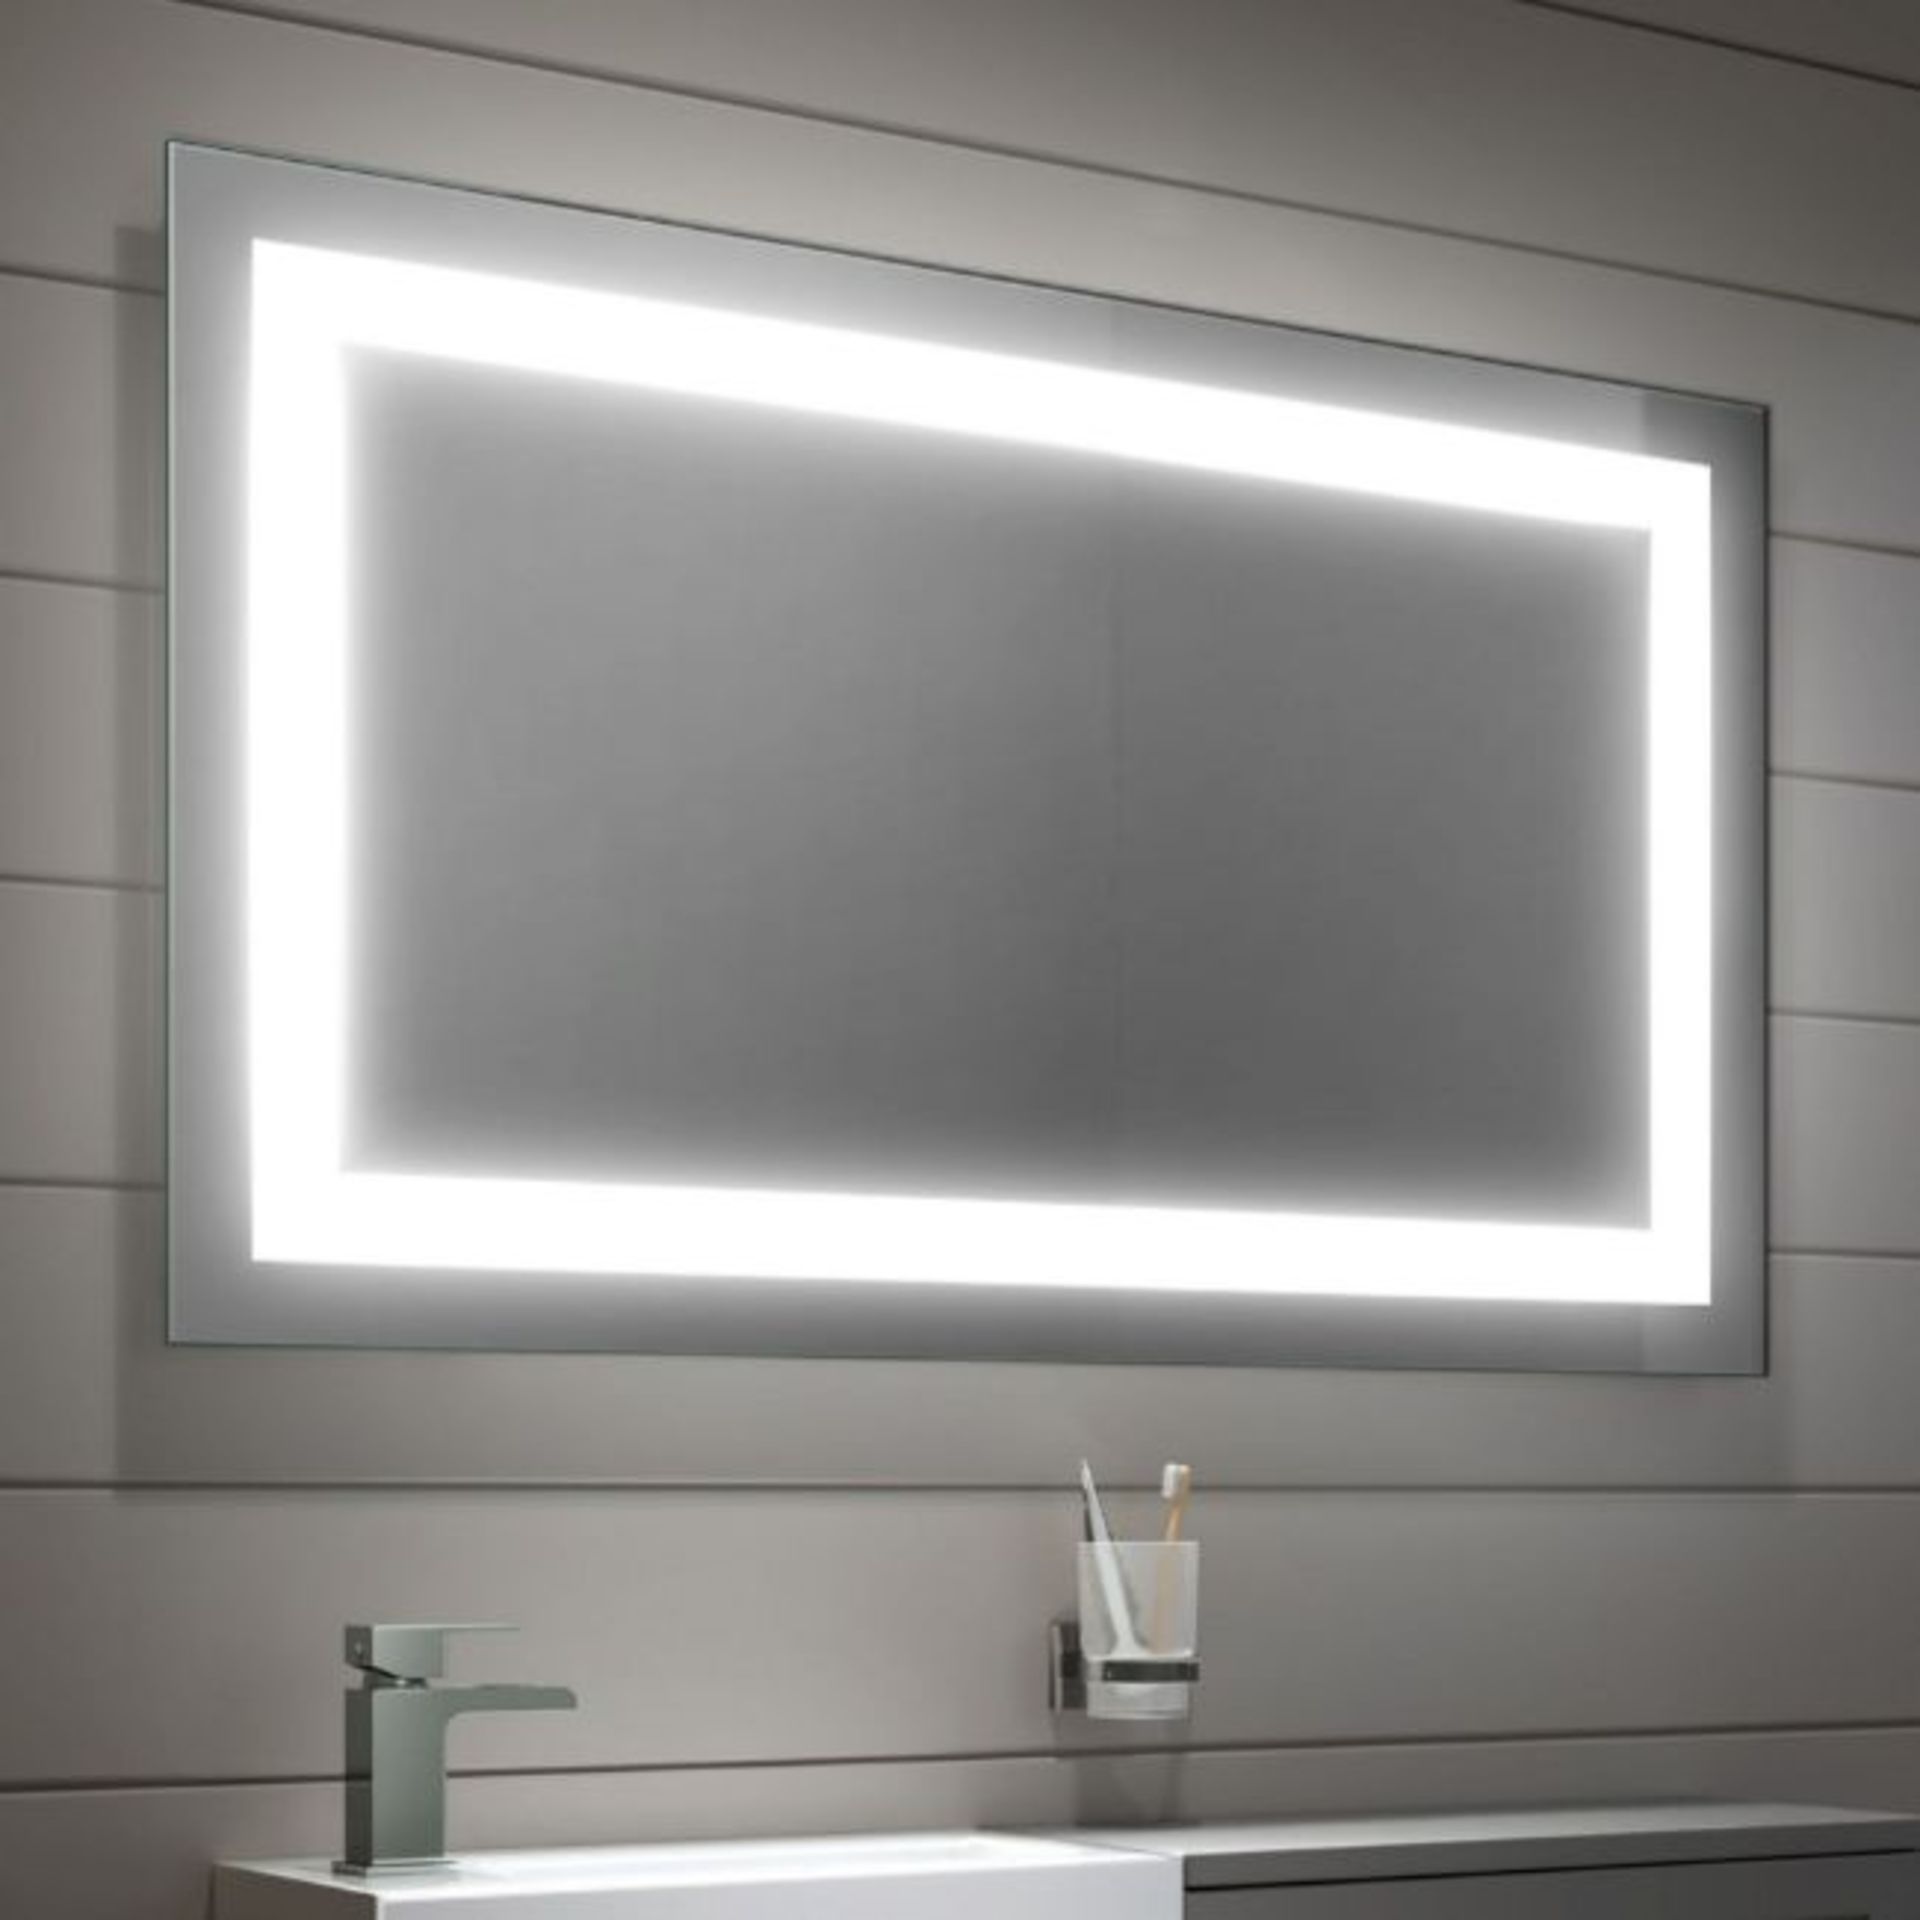 New 600x1000 Nova Illuminated Led Mirror. RRP £499.99.Ml7006.We Love This Mirror As It Prov... New